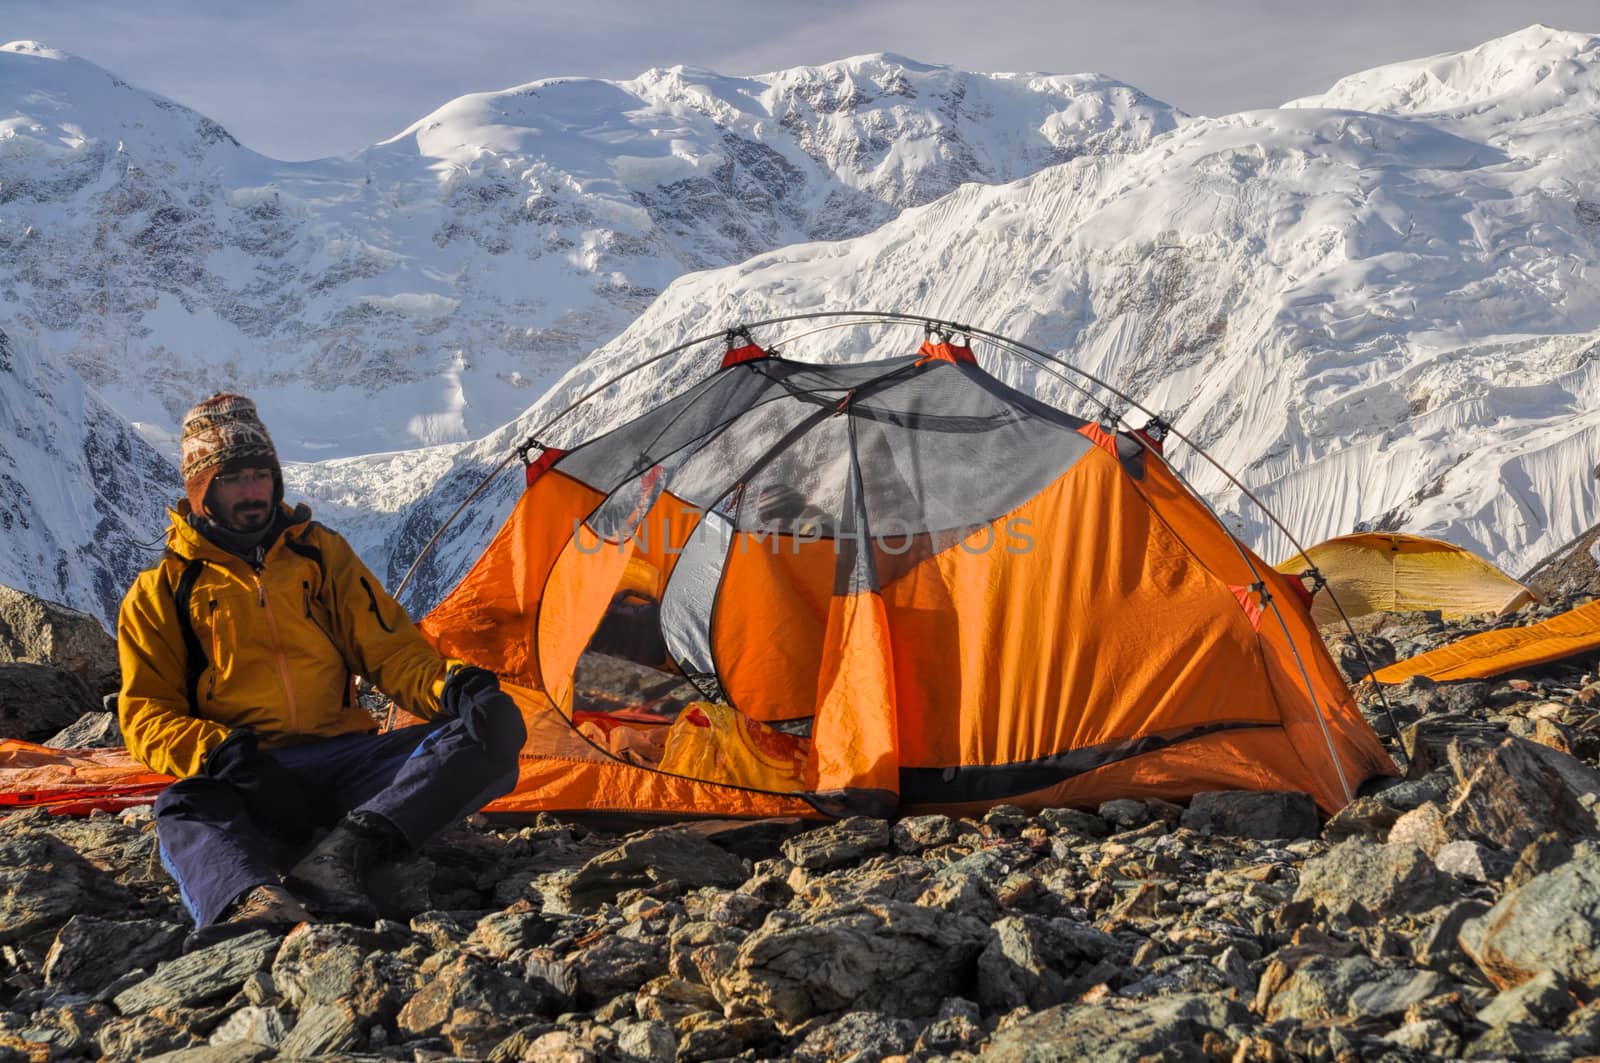 Engilchek glacier camping by MichalKnitl